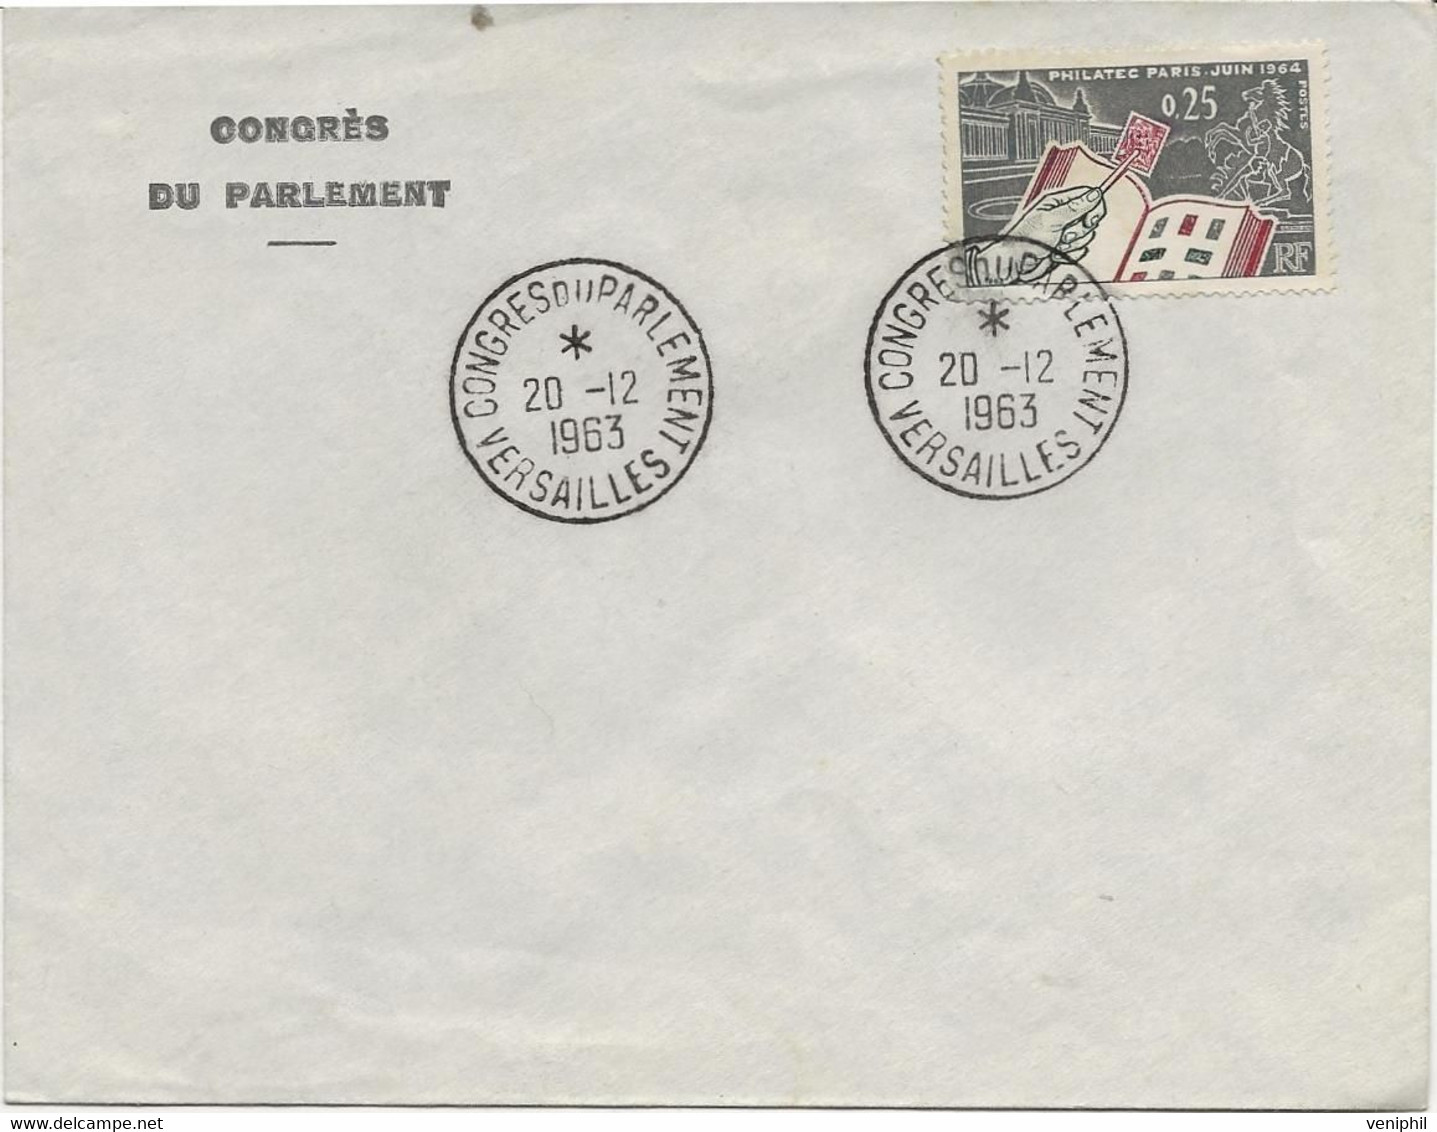 LETTRE OBLITEREE CONGRES DU PARLEMENT -VERSAILLES - 20-12-1963 -AFFRANCHIE TIMBRE N° 1403 - Manual Postmarks